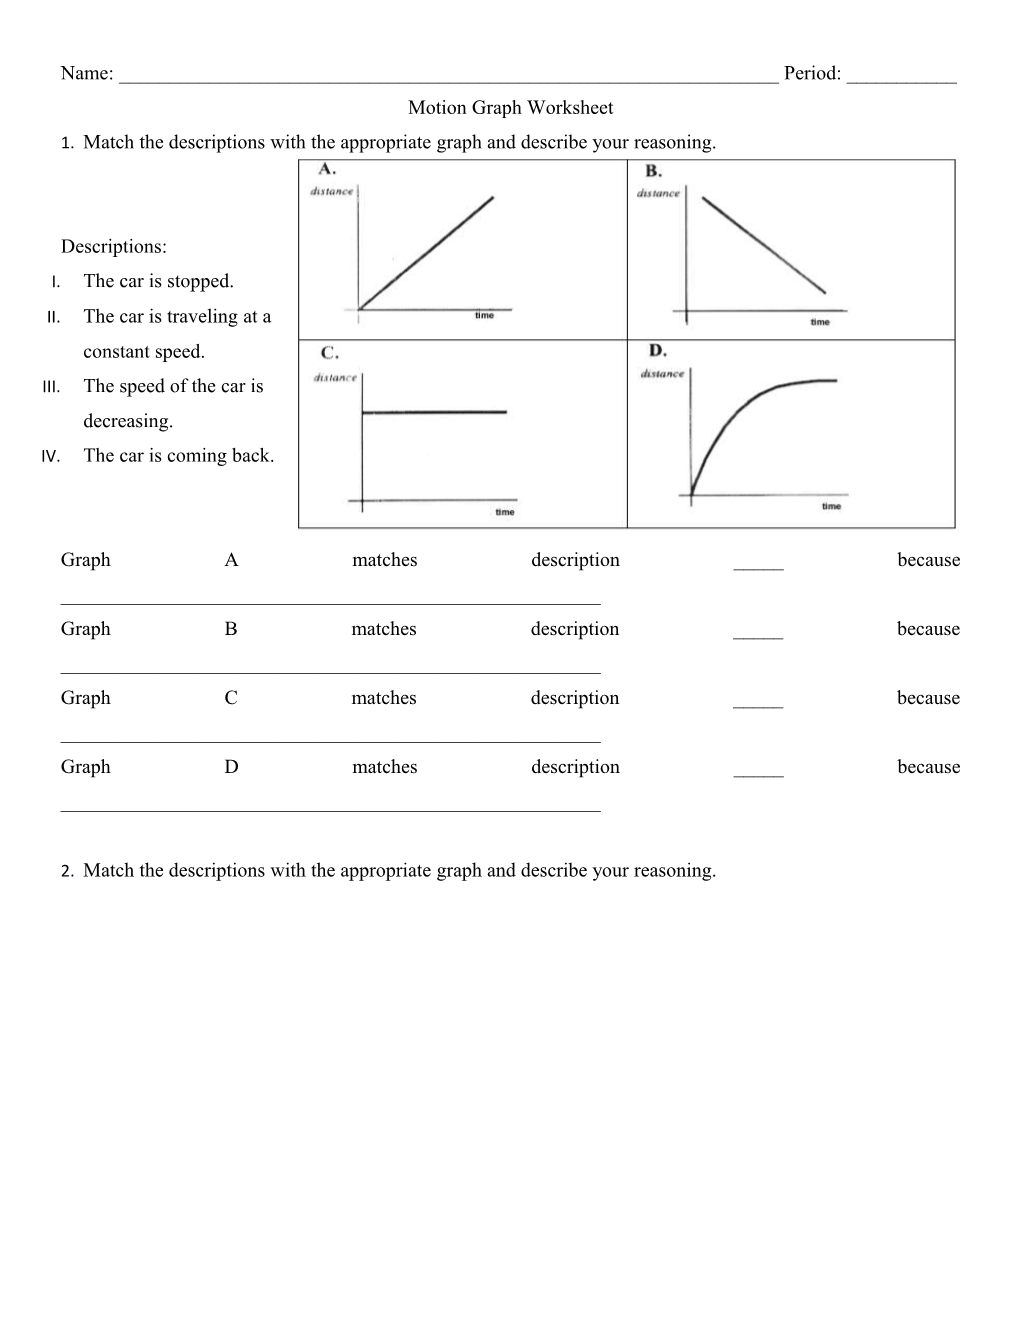 Motion Graph Worksheet